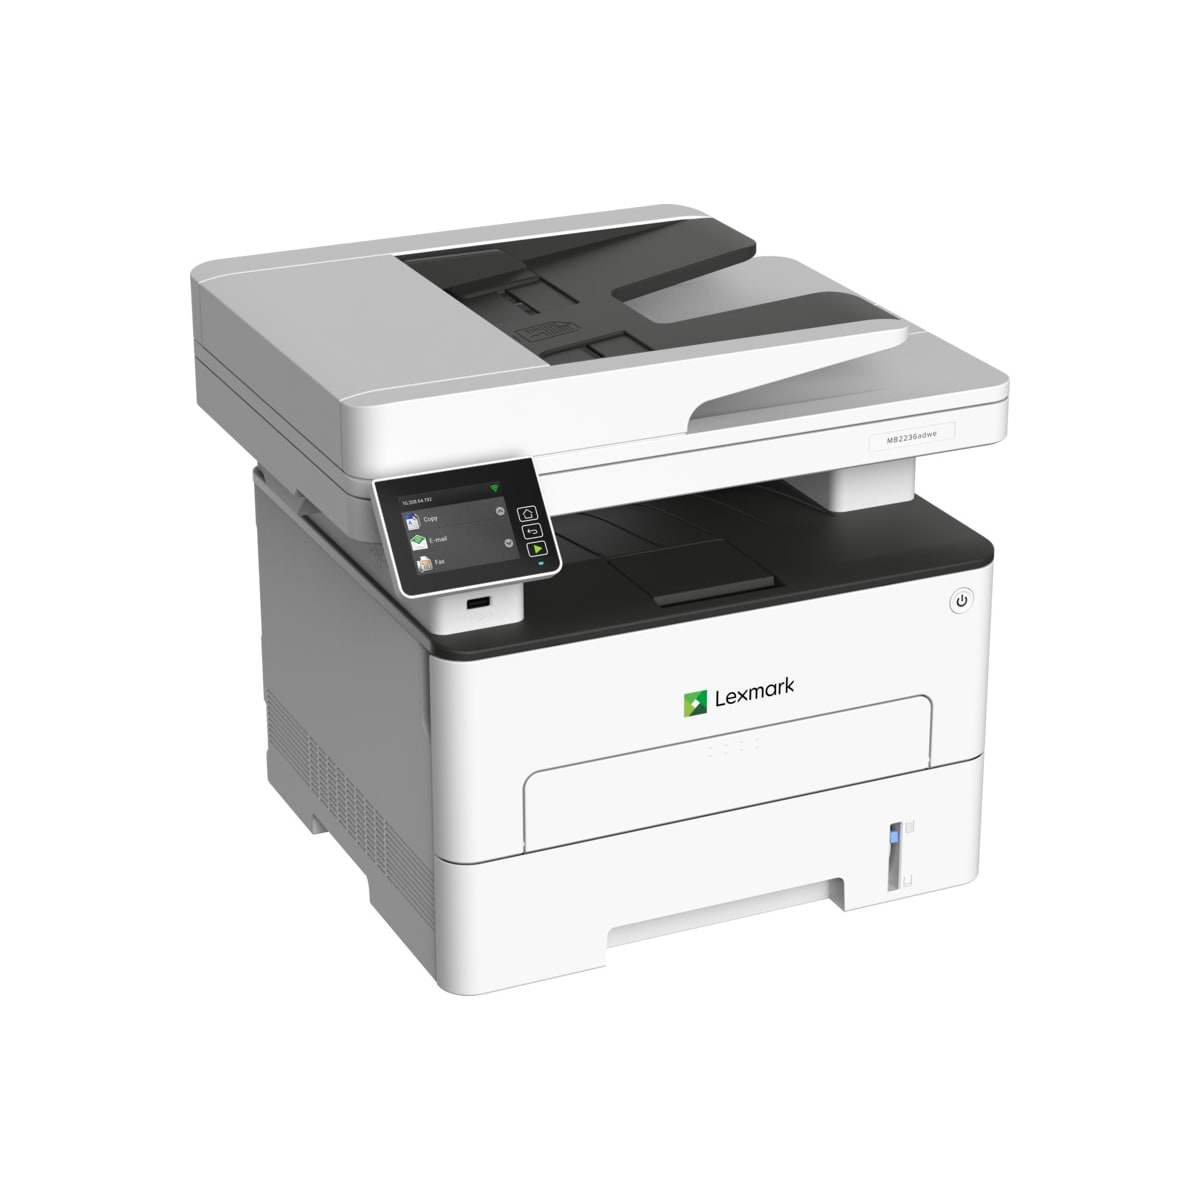 LEXMARK MB2236i Laser-Multifunktionsdrucker (A4, Drucker Scanner, Drucker, Multifunktionsgeräte s/w Laser und 4-in-1, ADF, Cloud-Fax, Kopierer